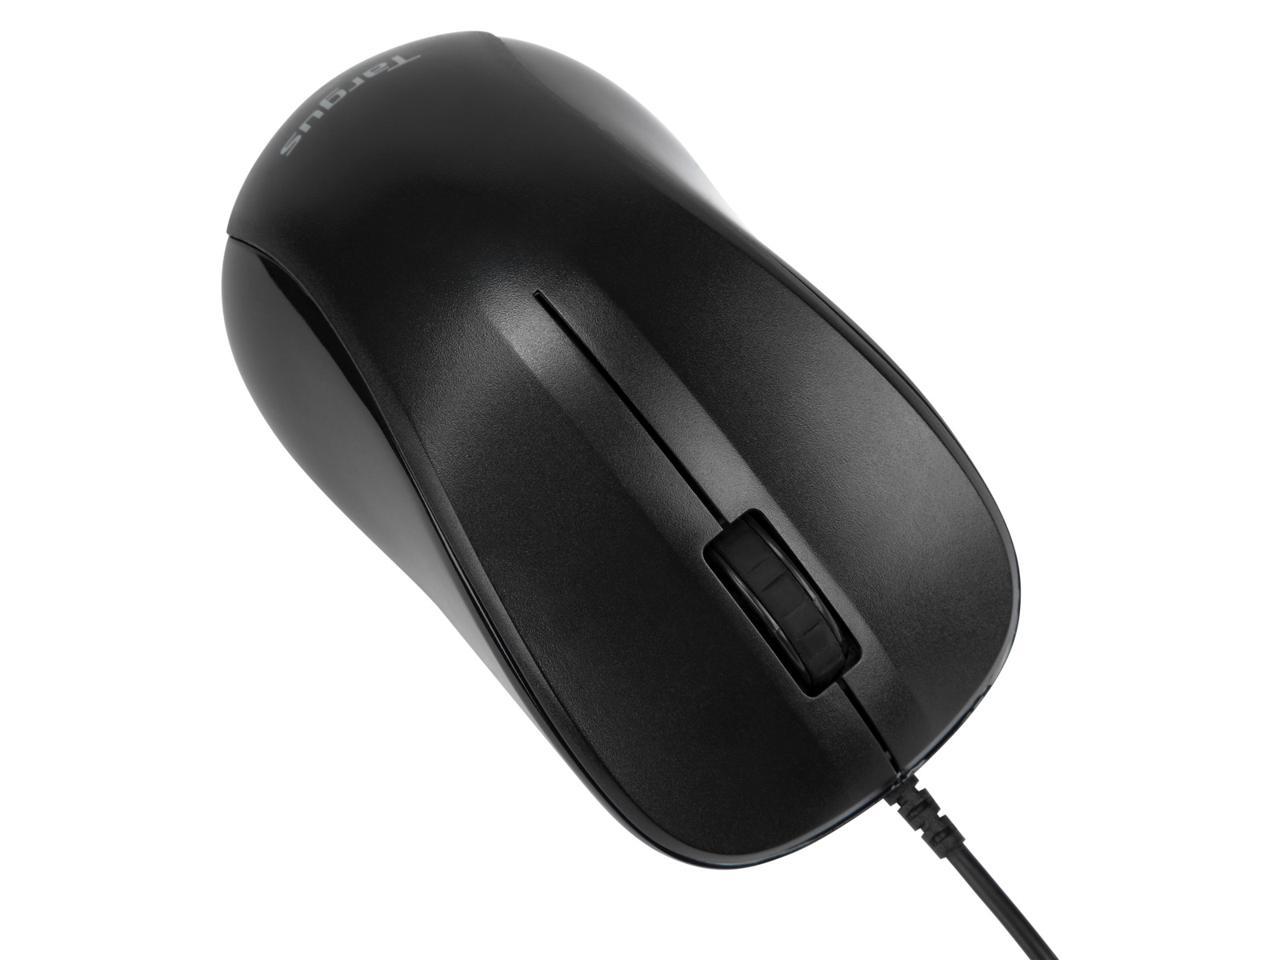 Targus USB Optical Laptop Mouse - AMU80US